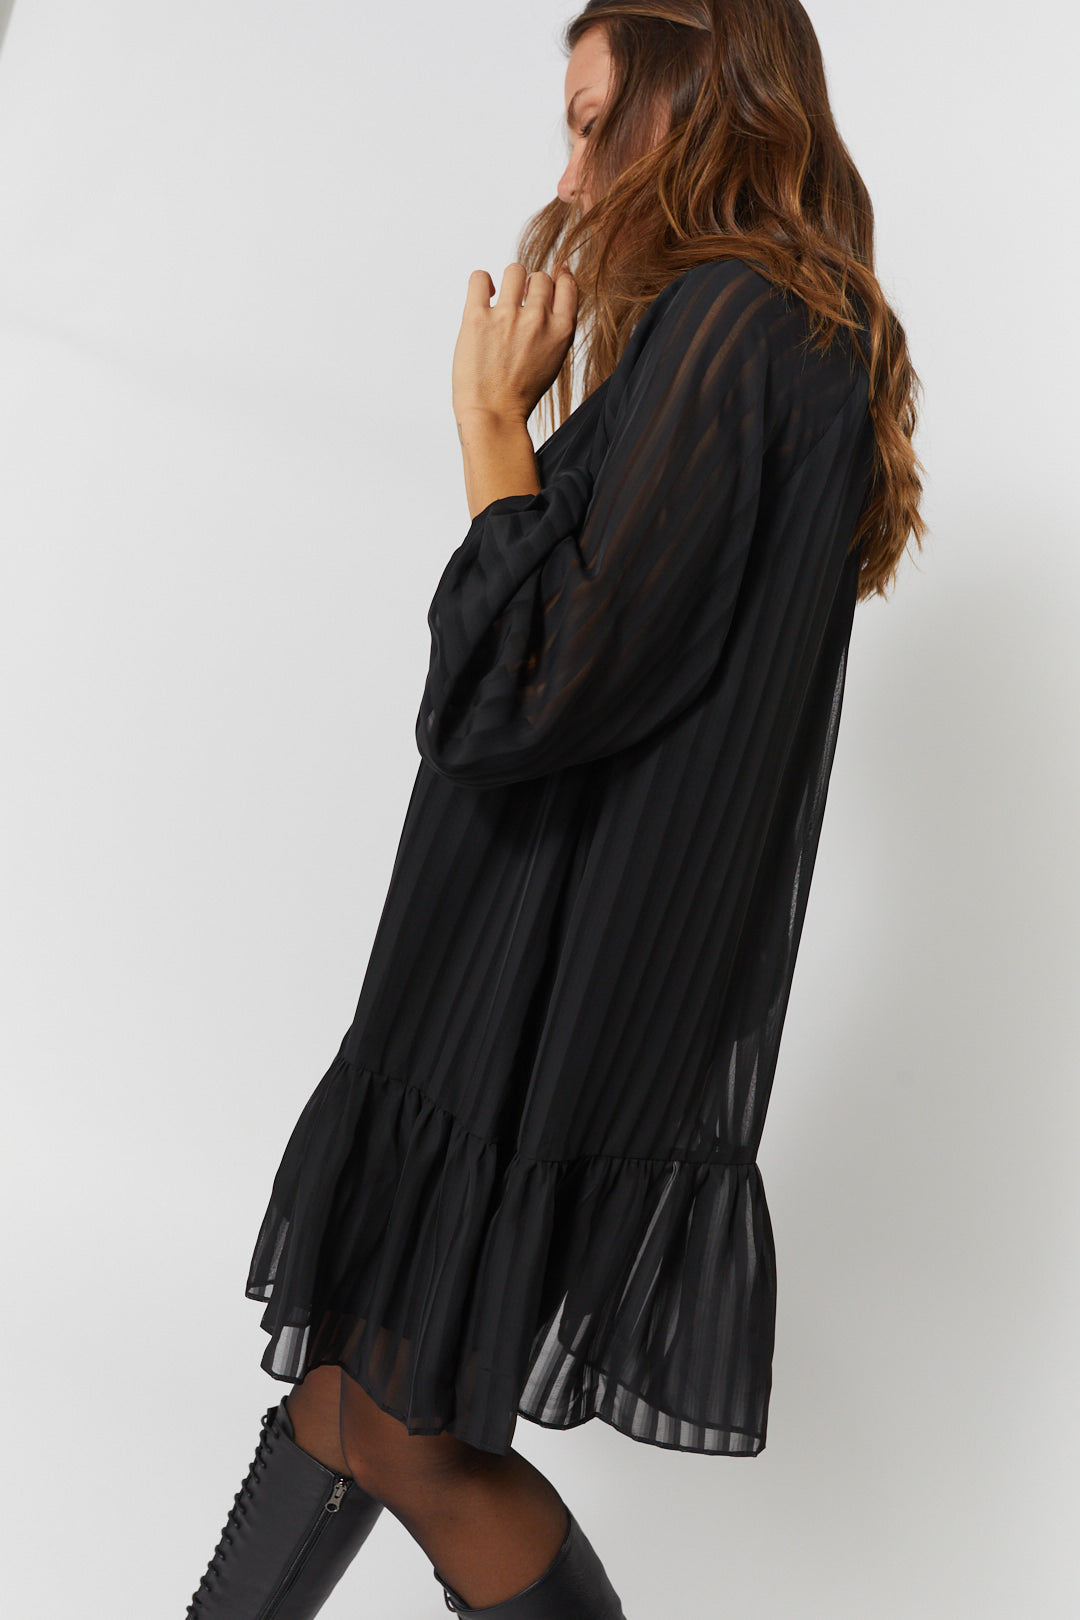 Black dress | Selma